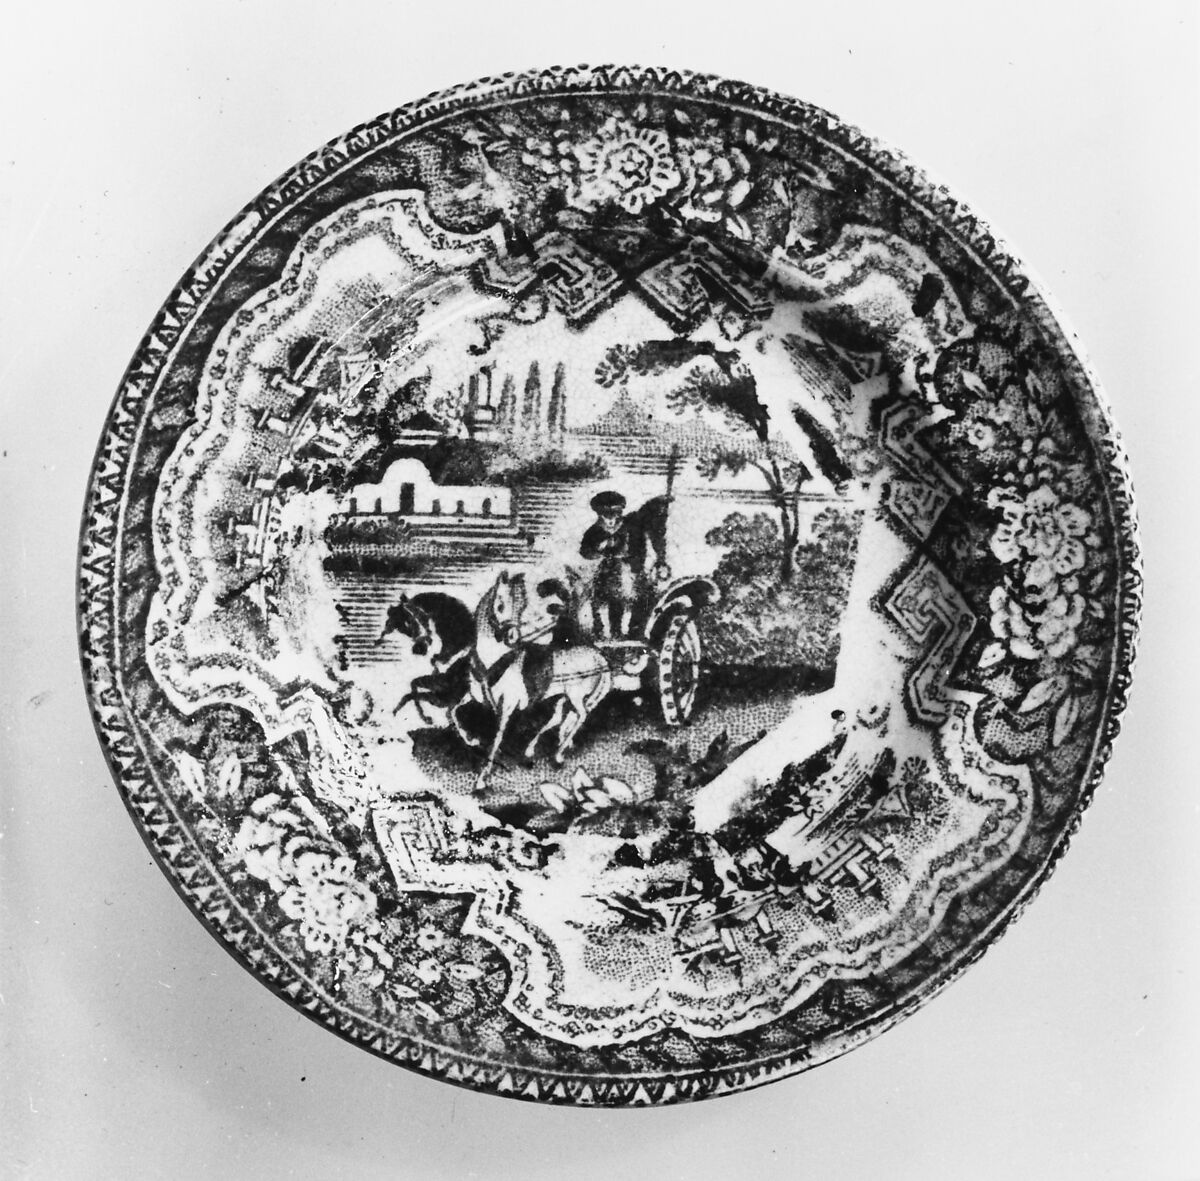 Cup Plate, William Adams &amp; Sons (British, active ca. 1819–present), Earthenware, transfer-printed, British (American market) 